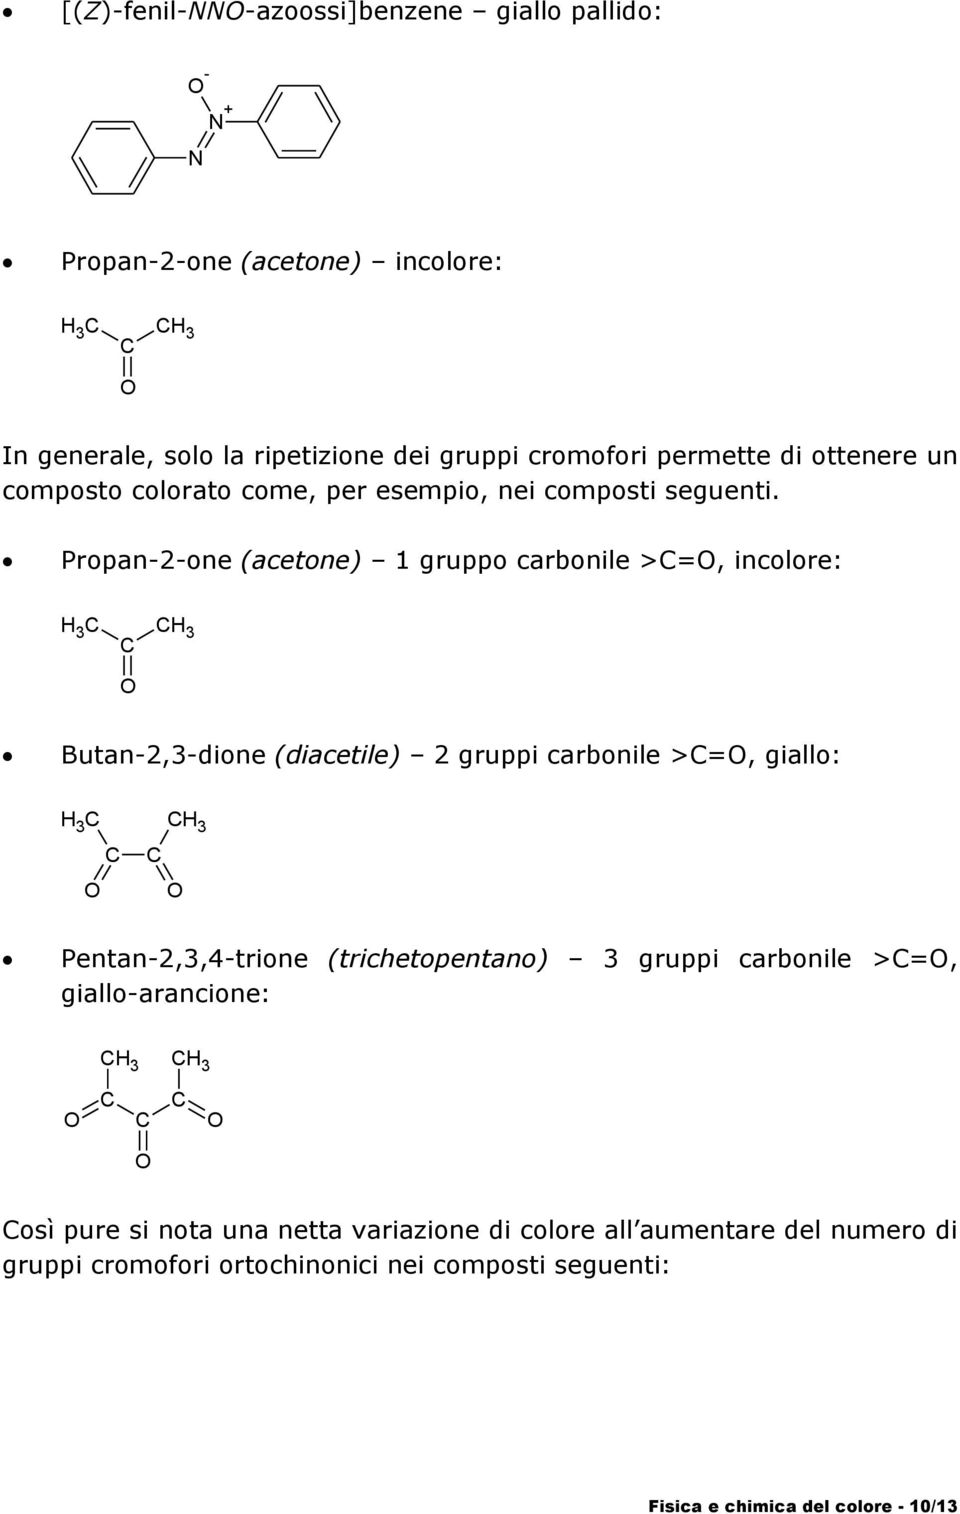 Propan-2-one (acetone) 1 gruppo carbonile >=, incolore: 3 3 Butan-2,3-dione (diacetile) 2 gruppi carbonile >=, giallo: 3 3 Pentan-2,3,4-trione